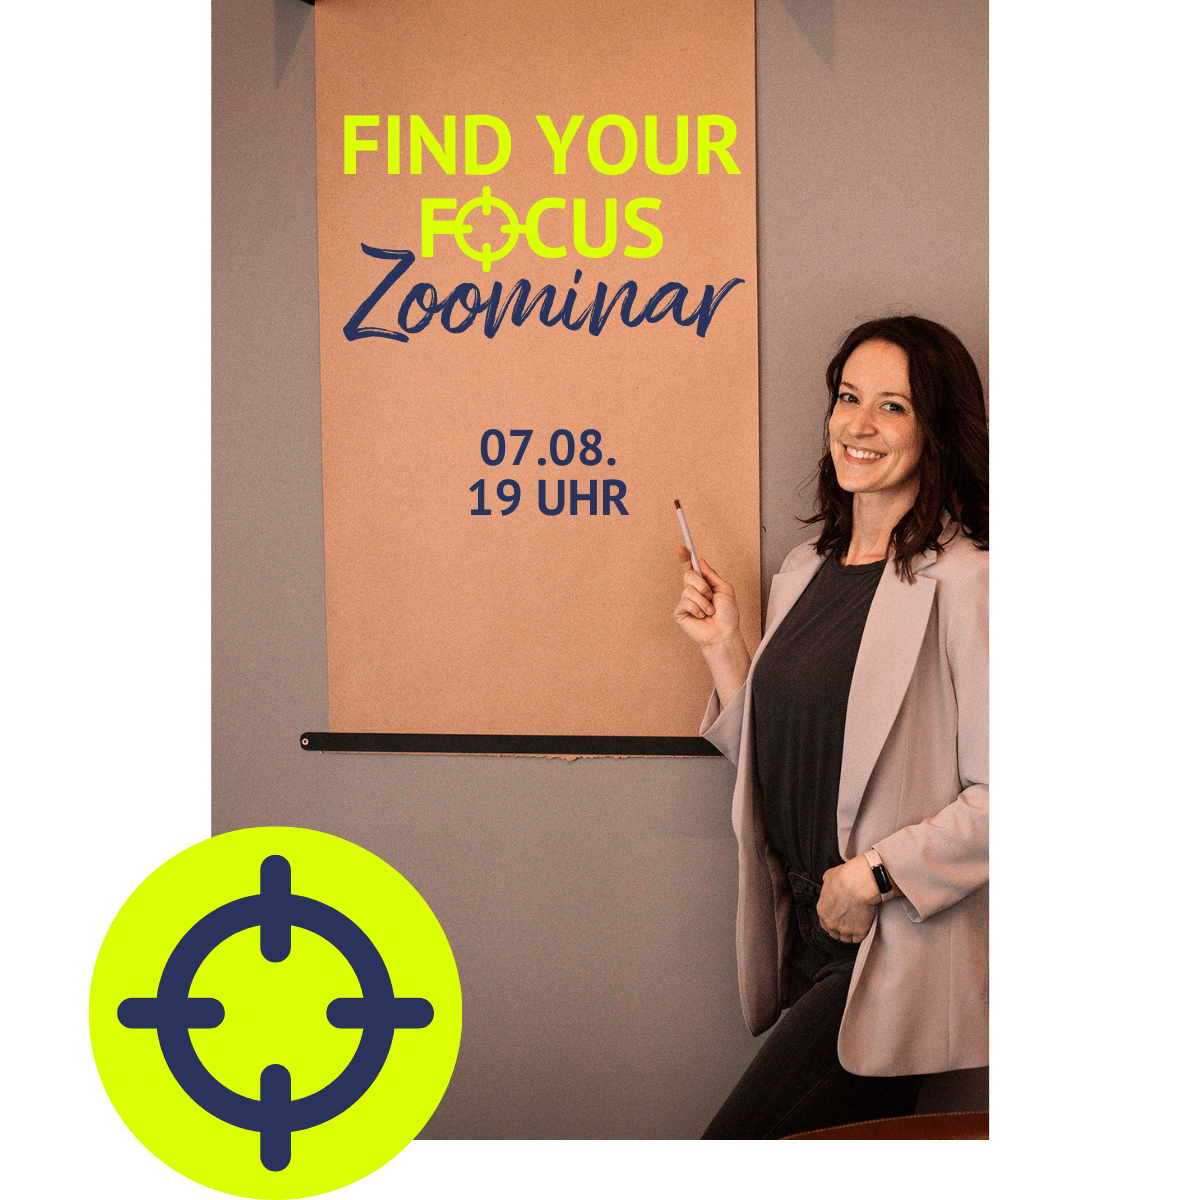 Find Your Focus Zoominar - 07.08. um 19 Uhr